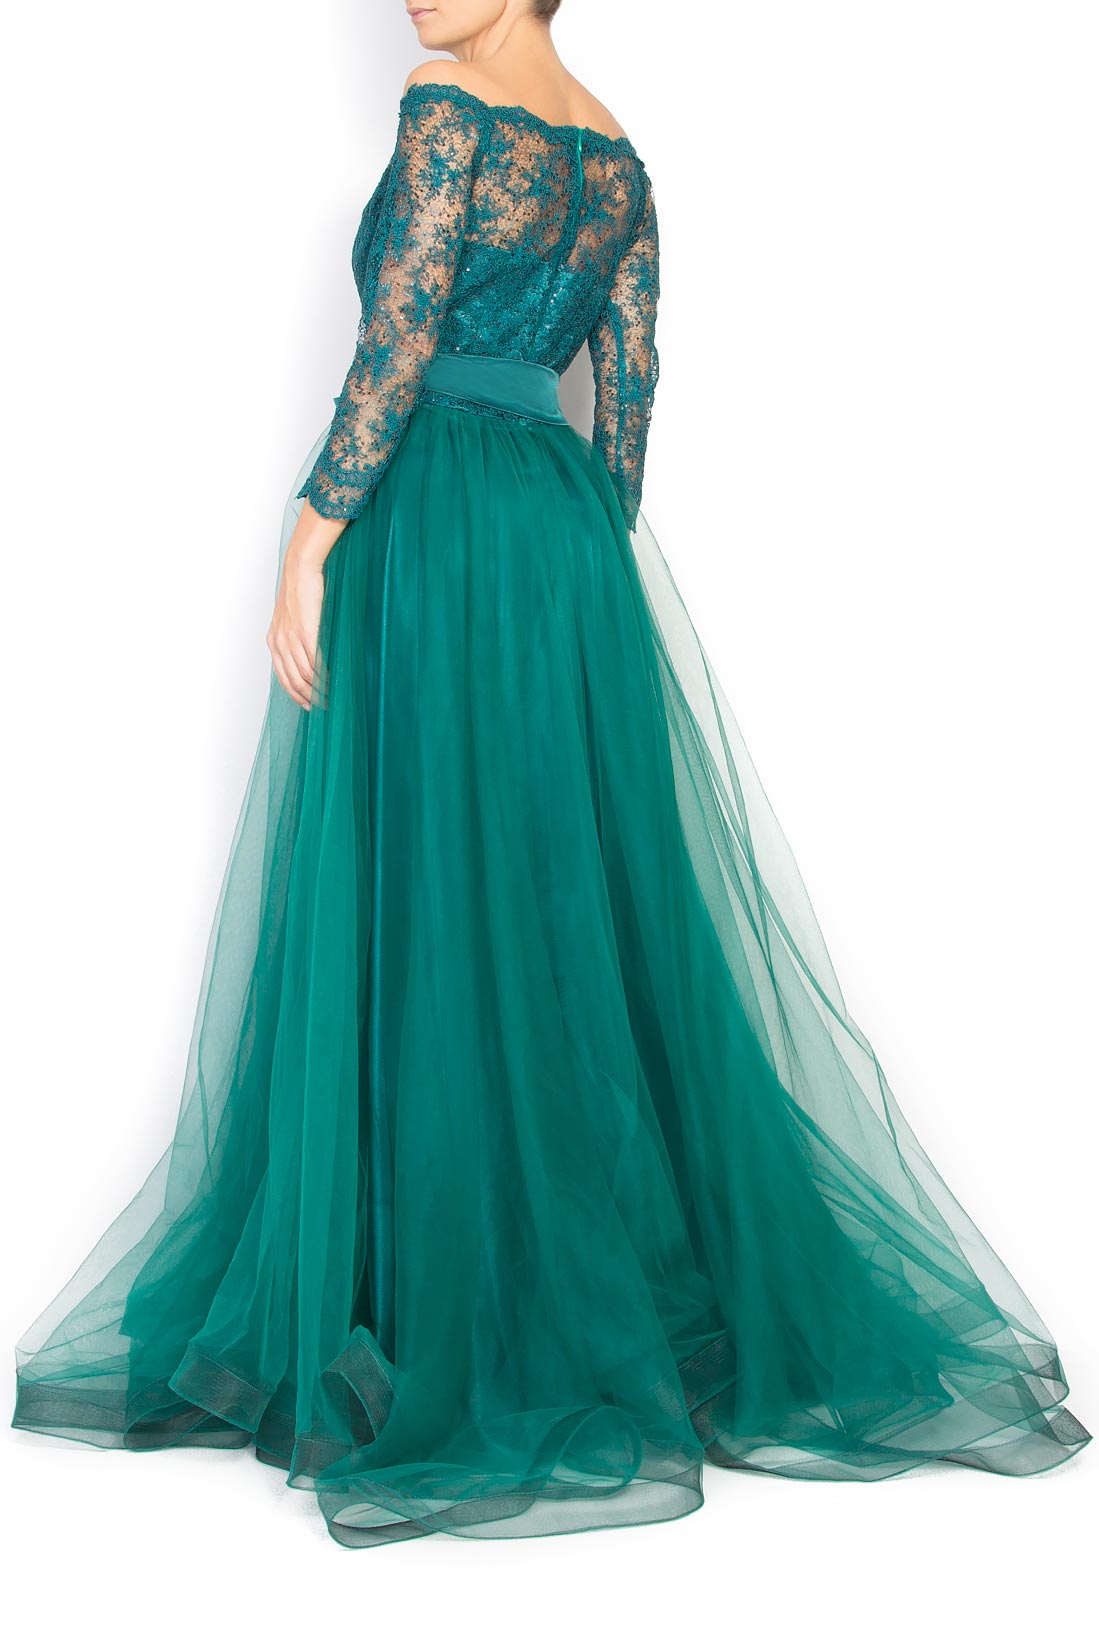 Lace and tulle gown Raffaela Moraru image 2